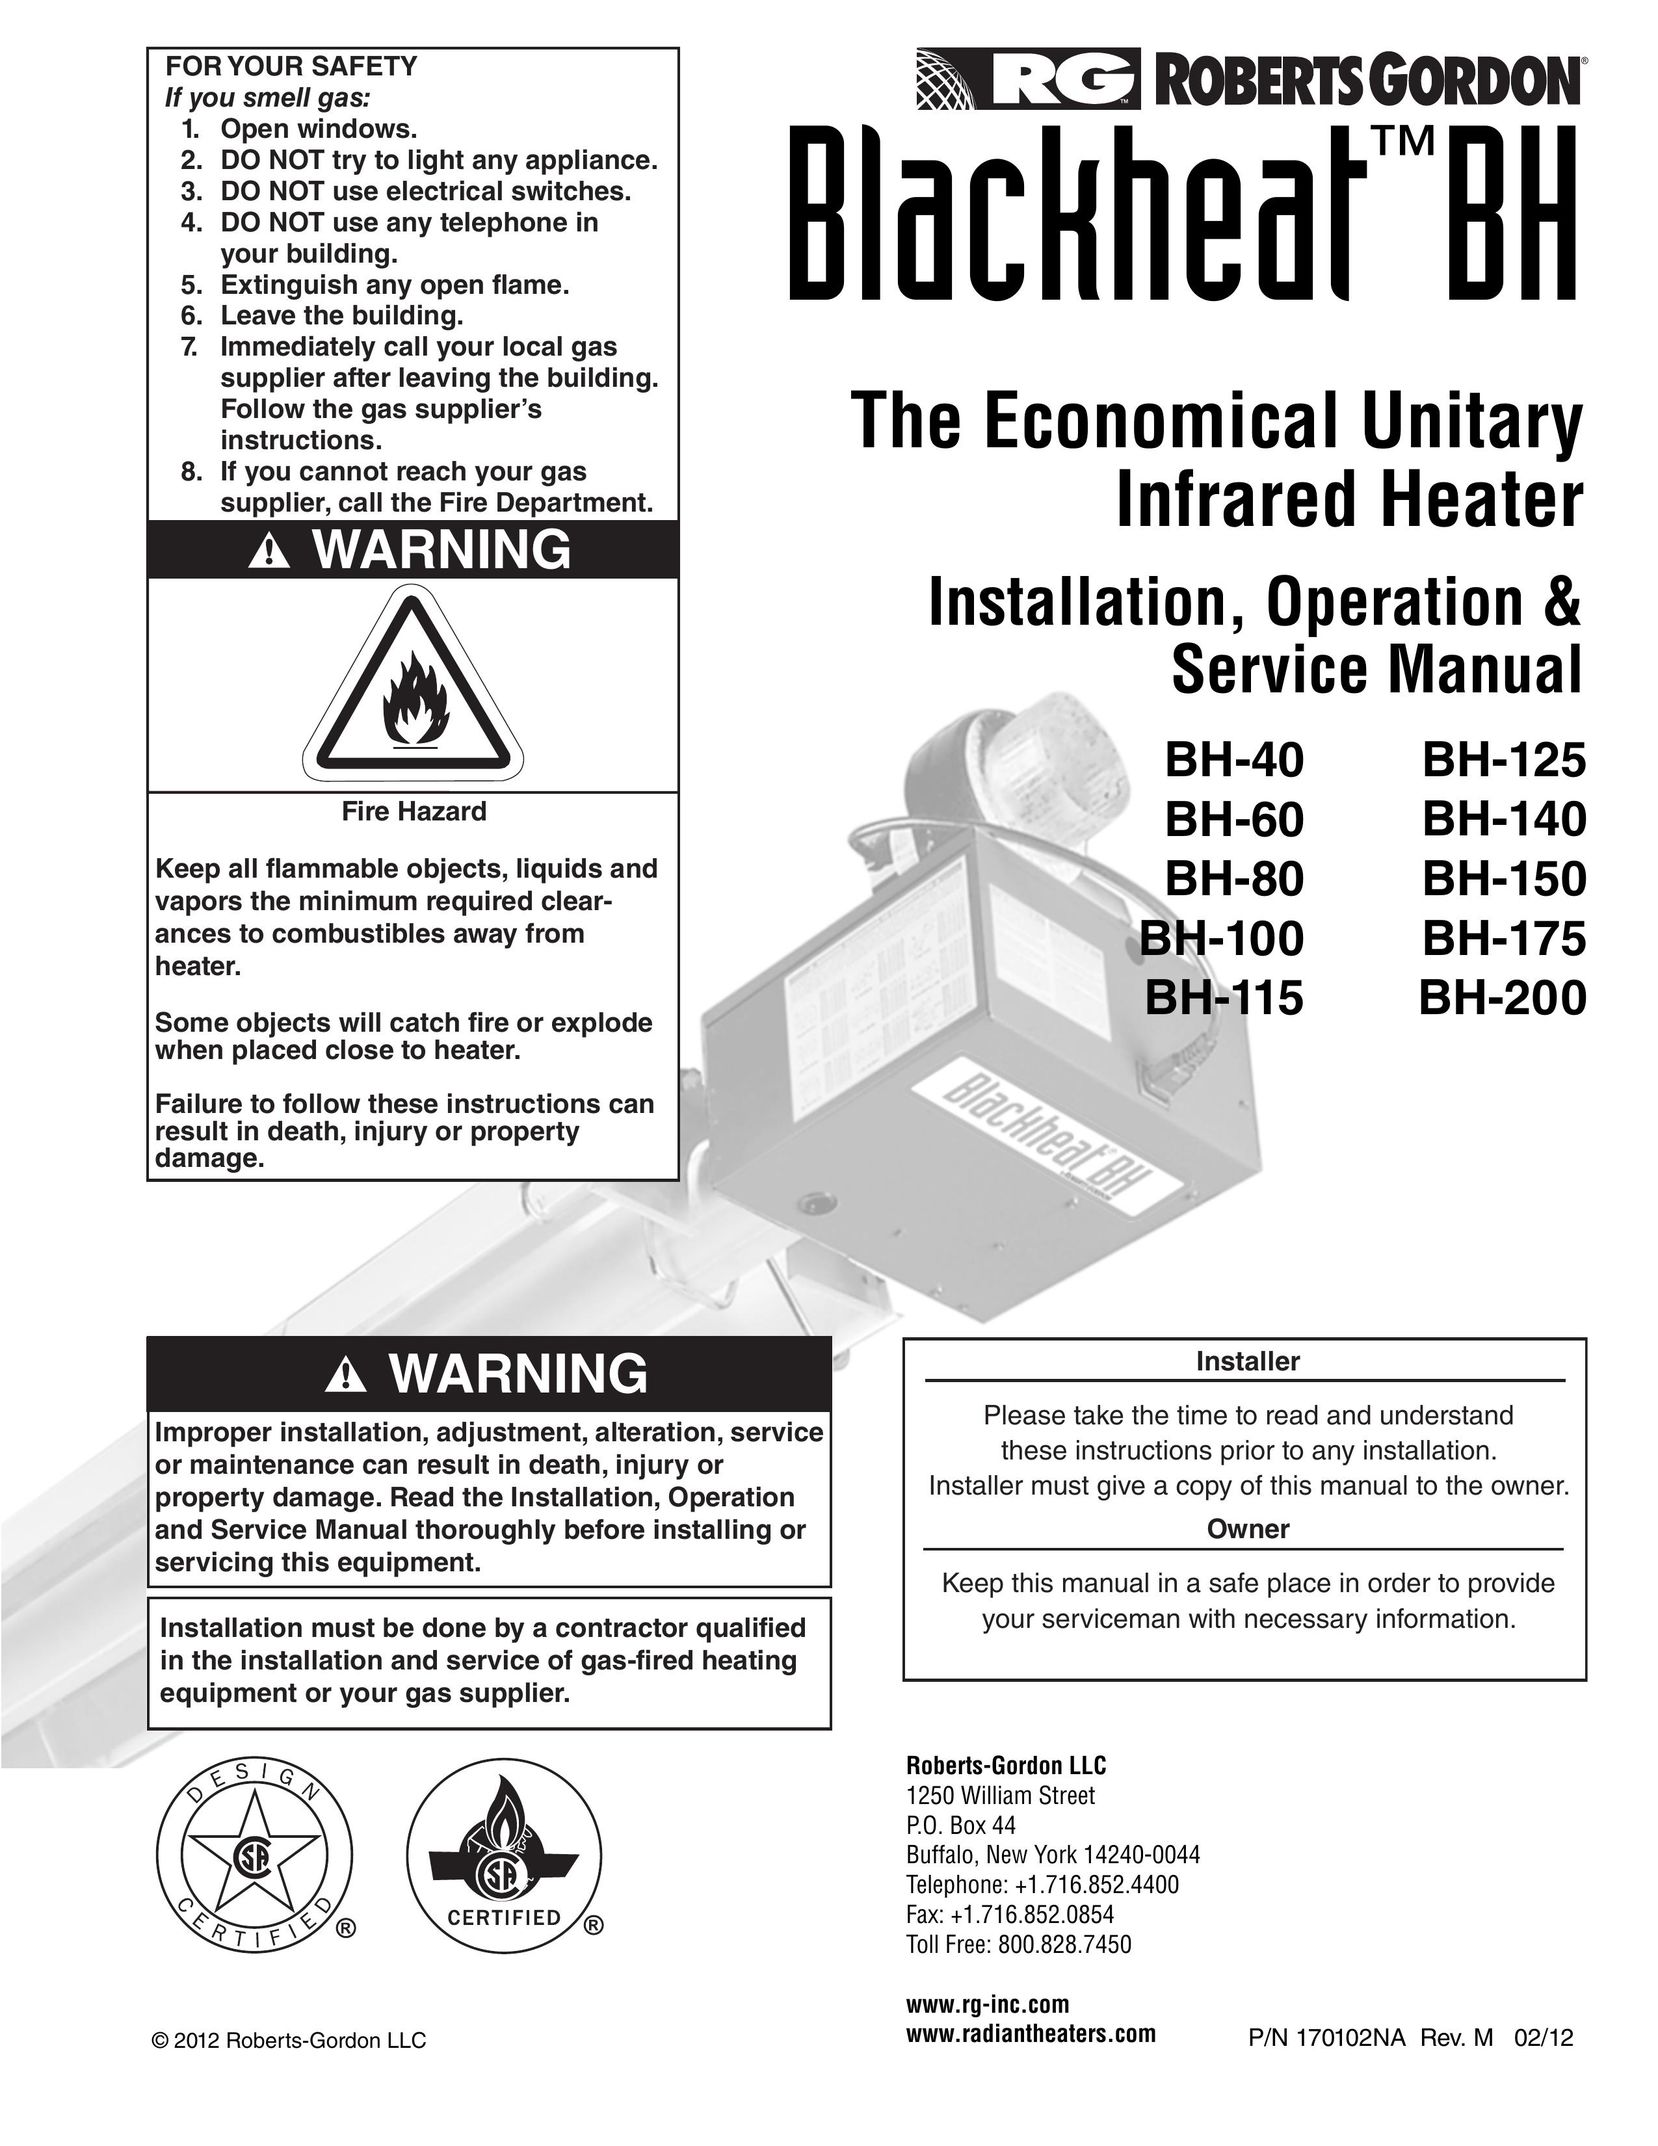 Roberts Gorden BH-200 Electric Heater User Manual